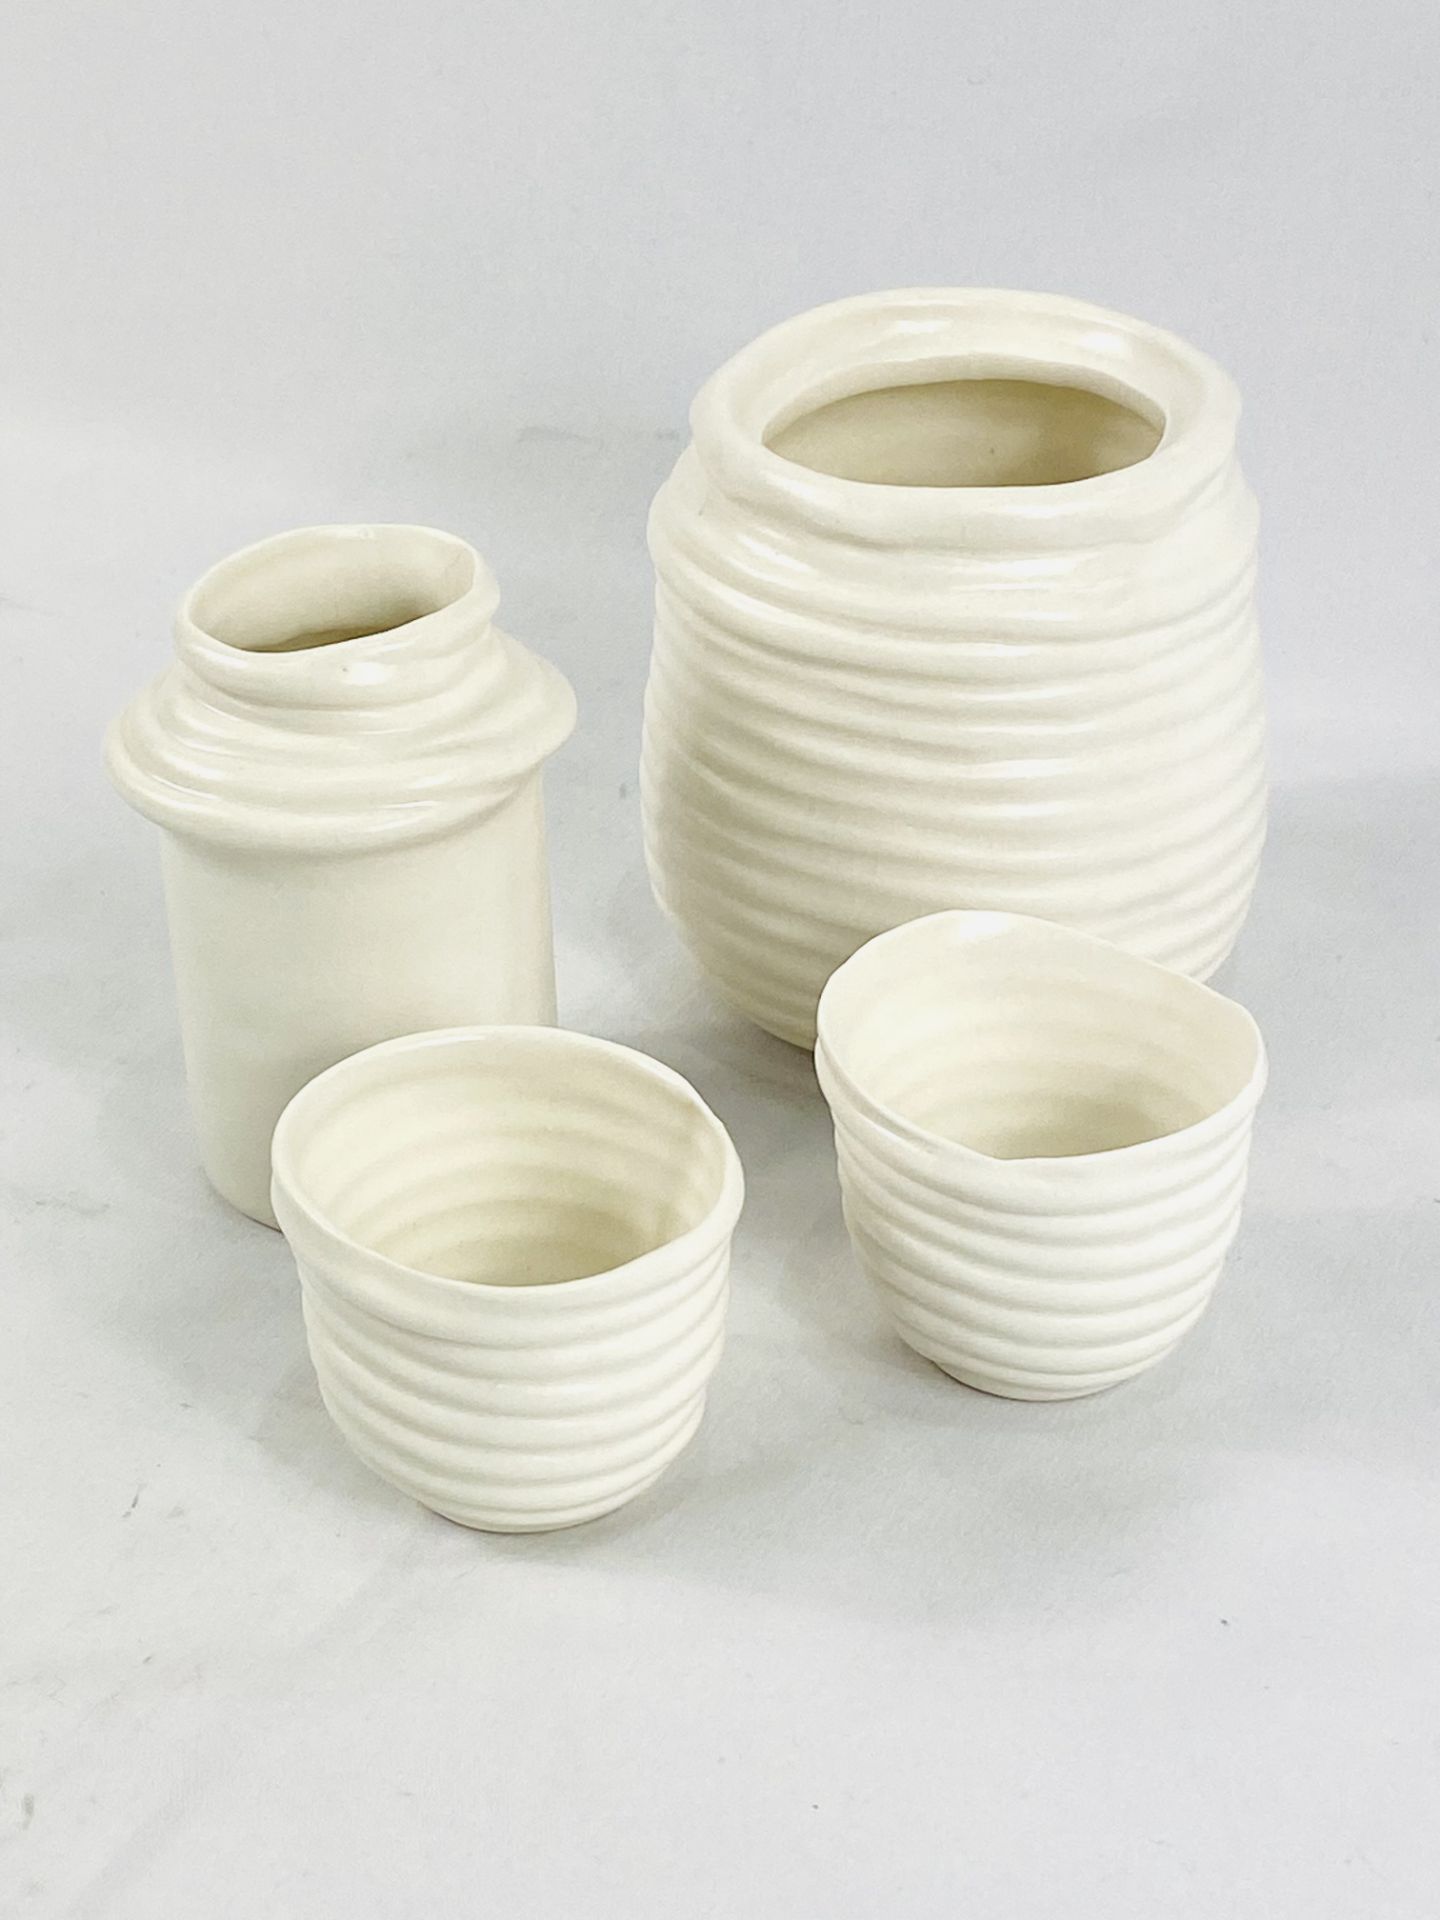 Kinoya Cole and Cinder ceramic sake set in original box. - Image 2 of 4